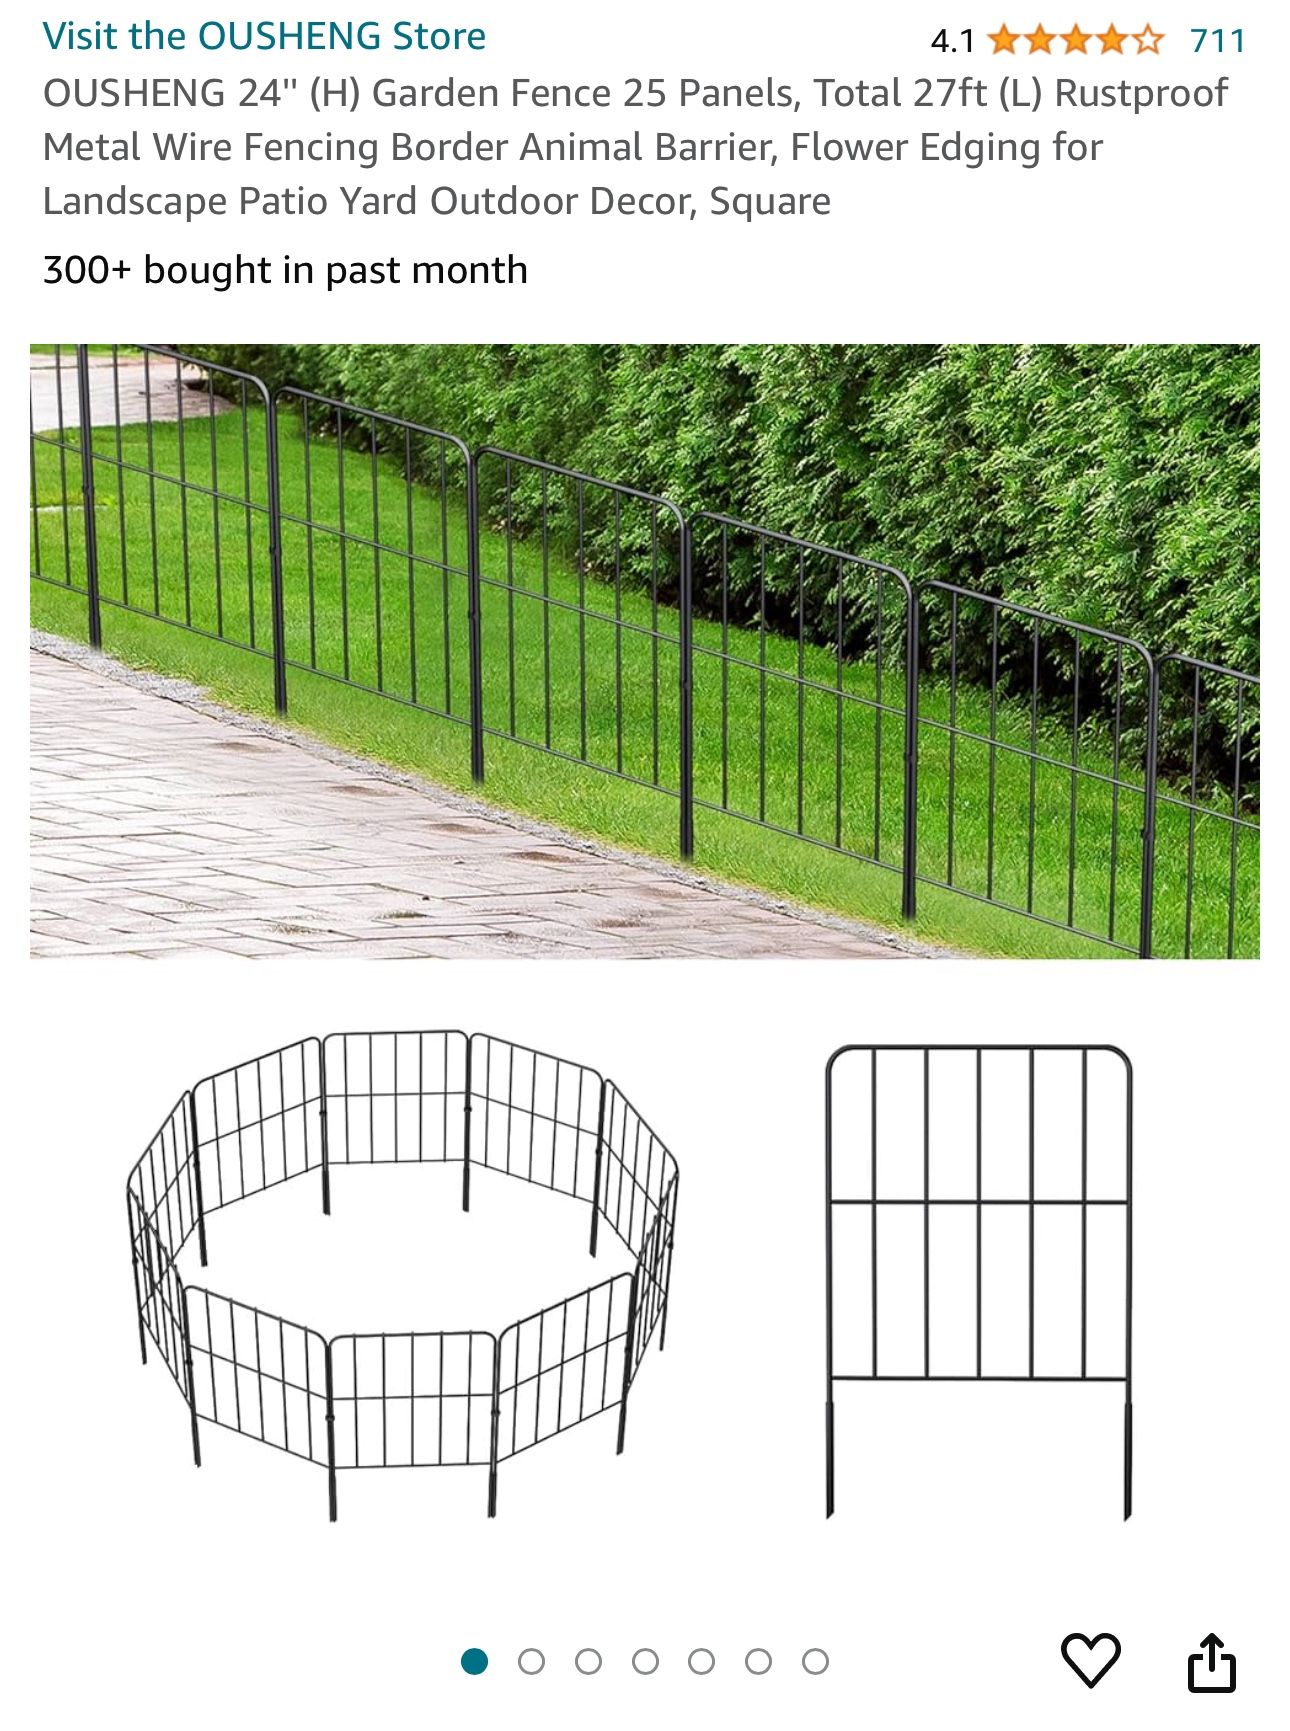 Garden Fence Like New!